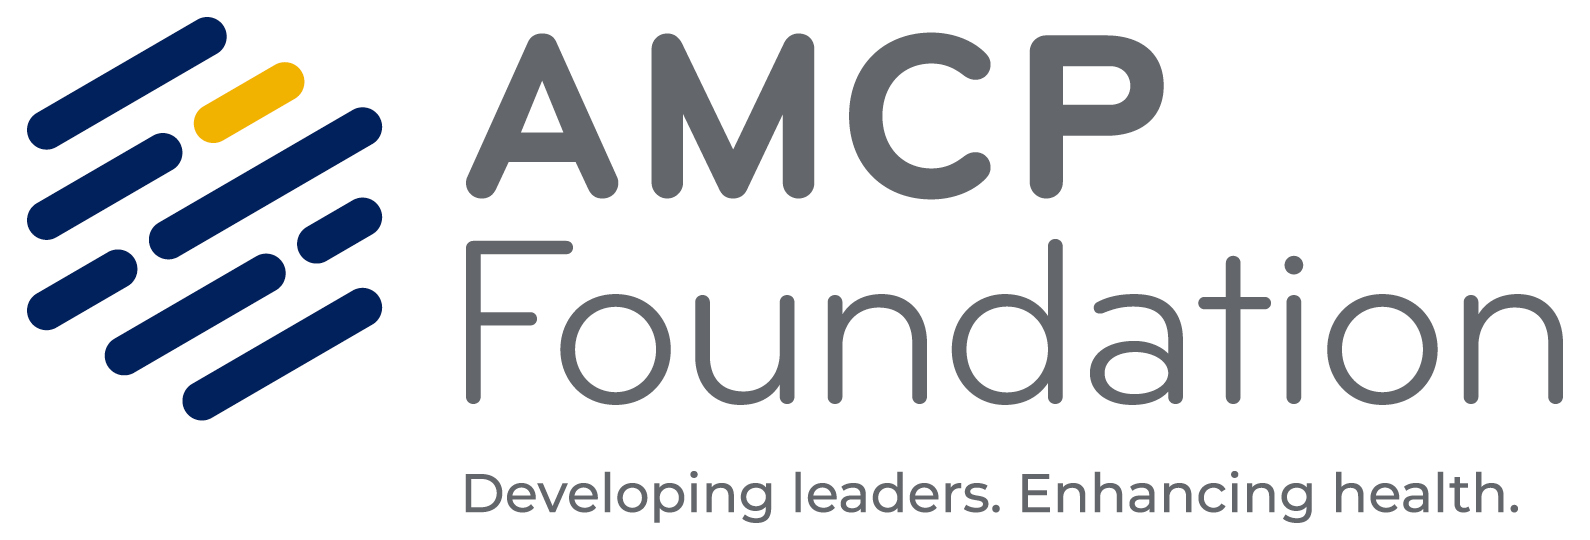 AMCP Foundation